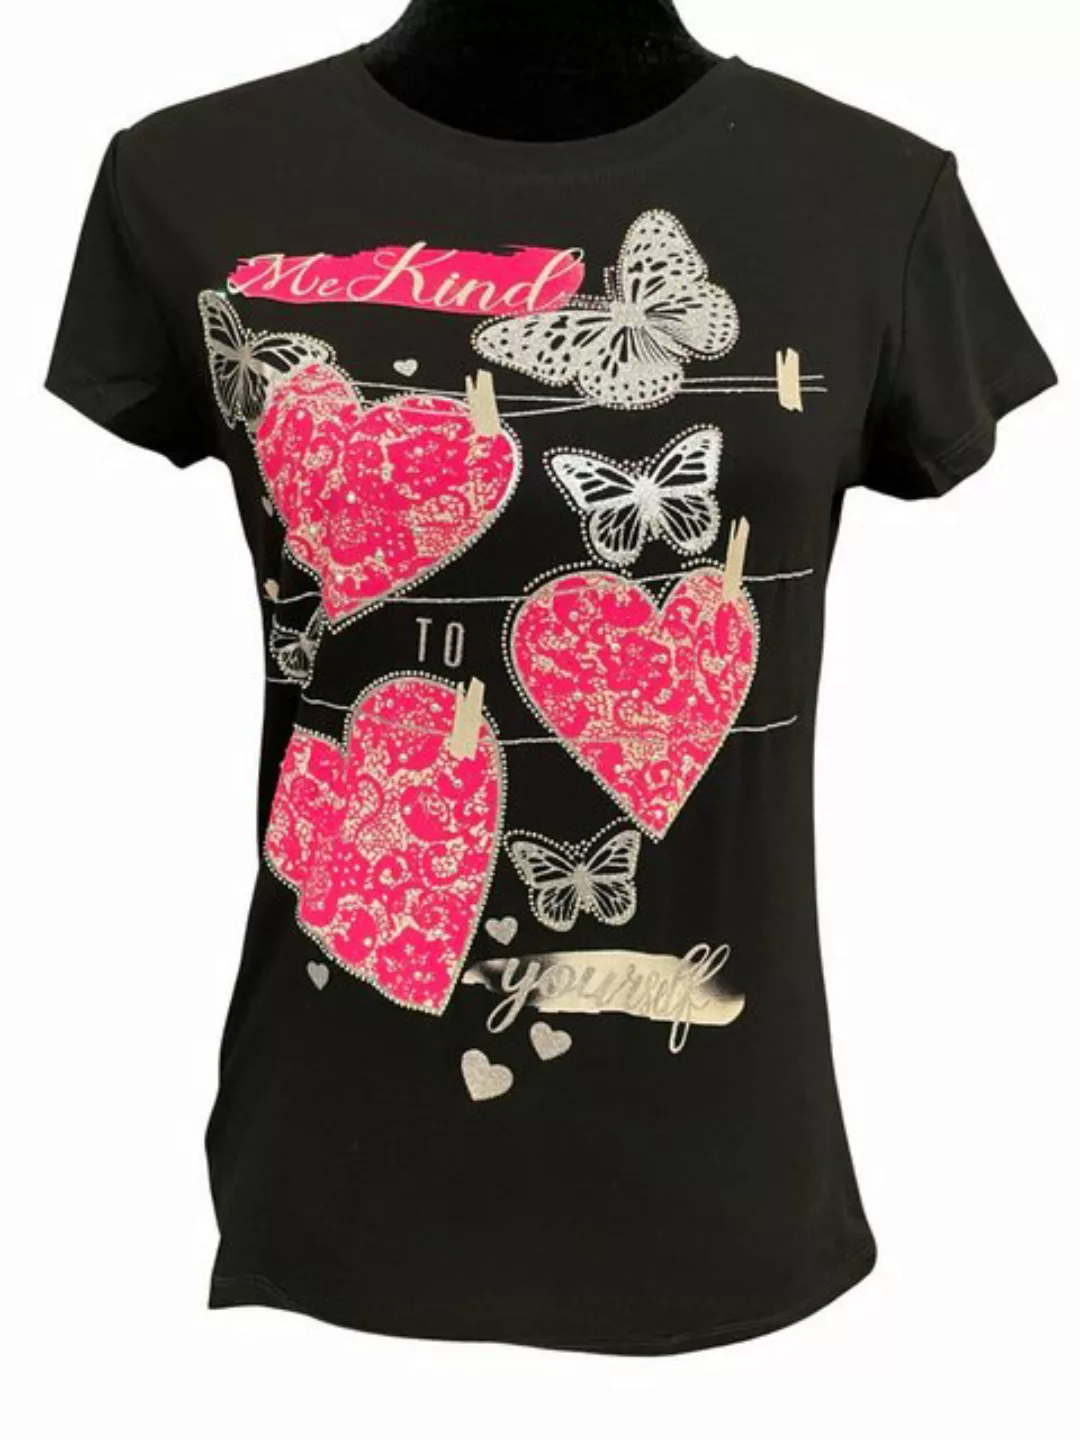 Fashion and Sports T-Shirt FaS205 Shirt Schmetterling 2-farbig AA ca. 47 cm günstig online kaufen